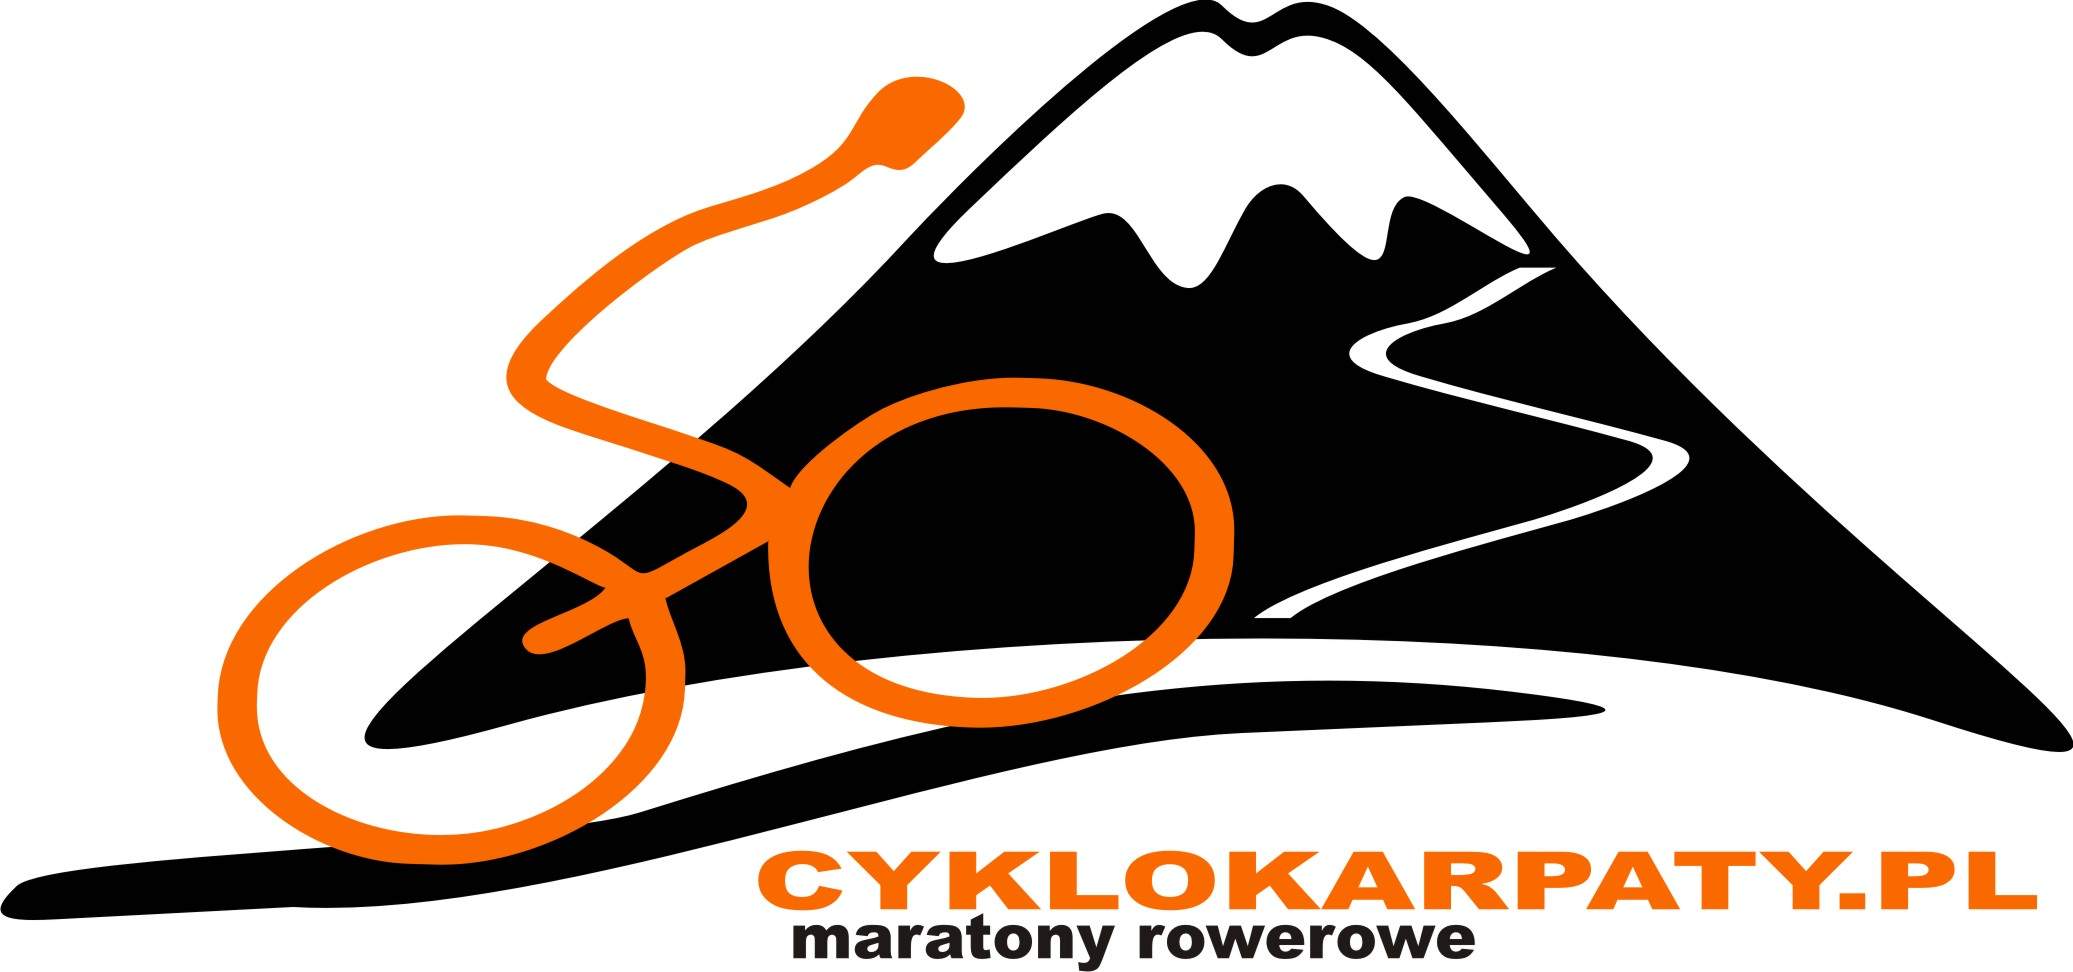 logo_cyklokarpaty_2011